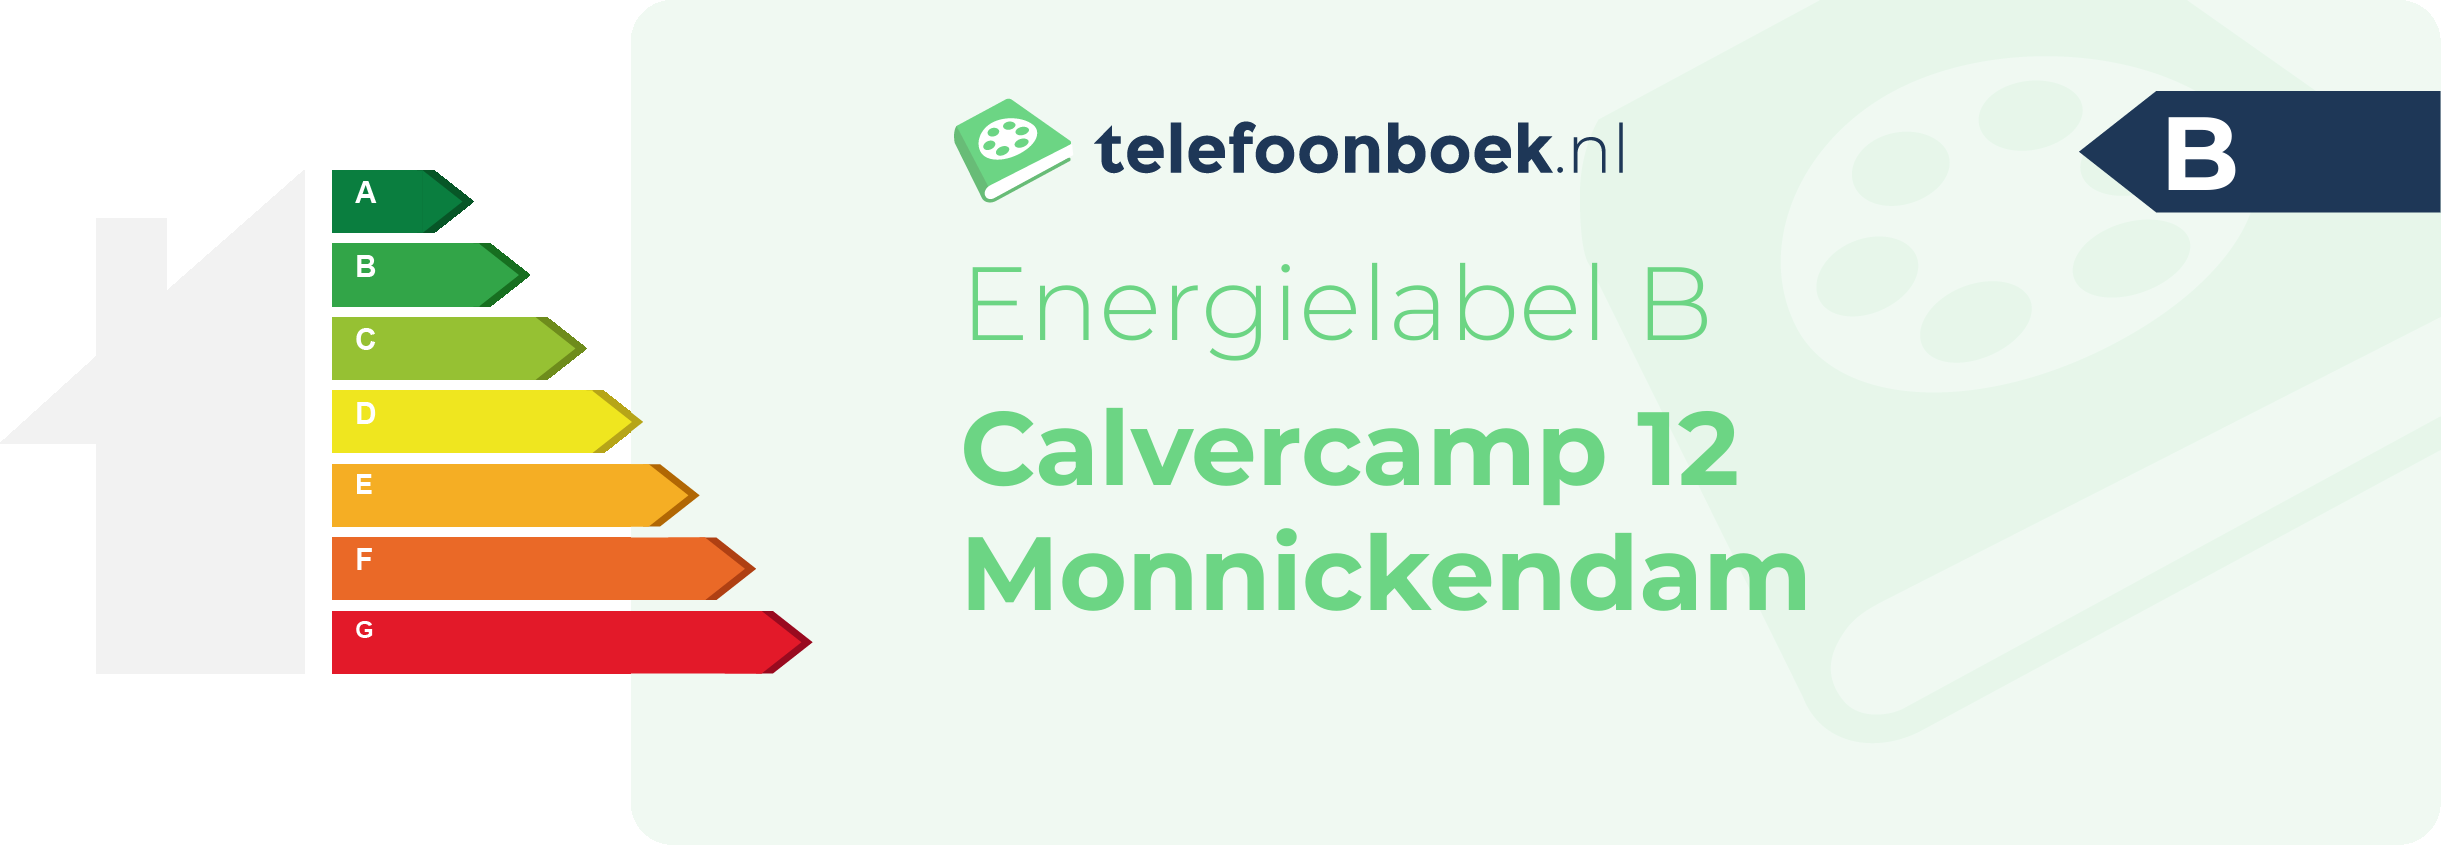 Energielabel Calvercamp 12 Monnickendam